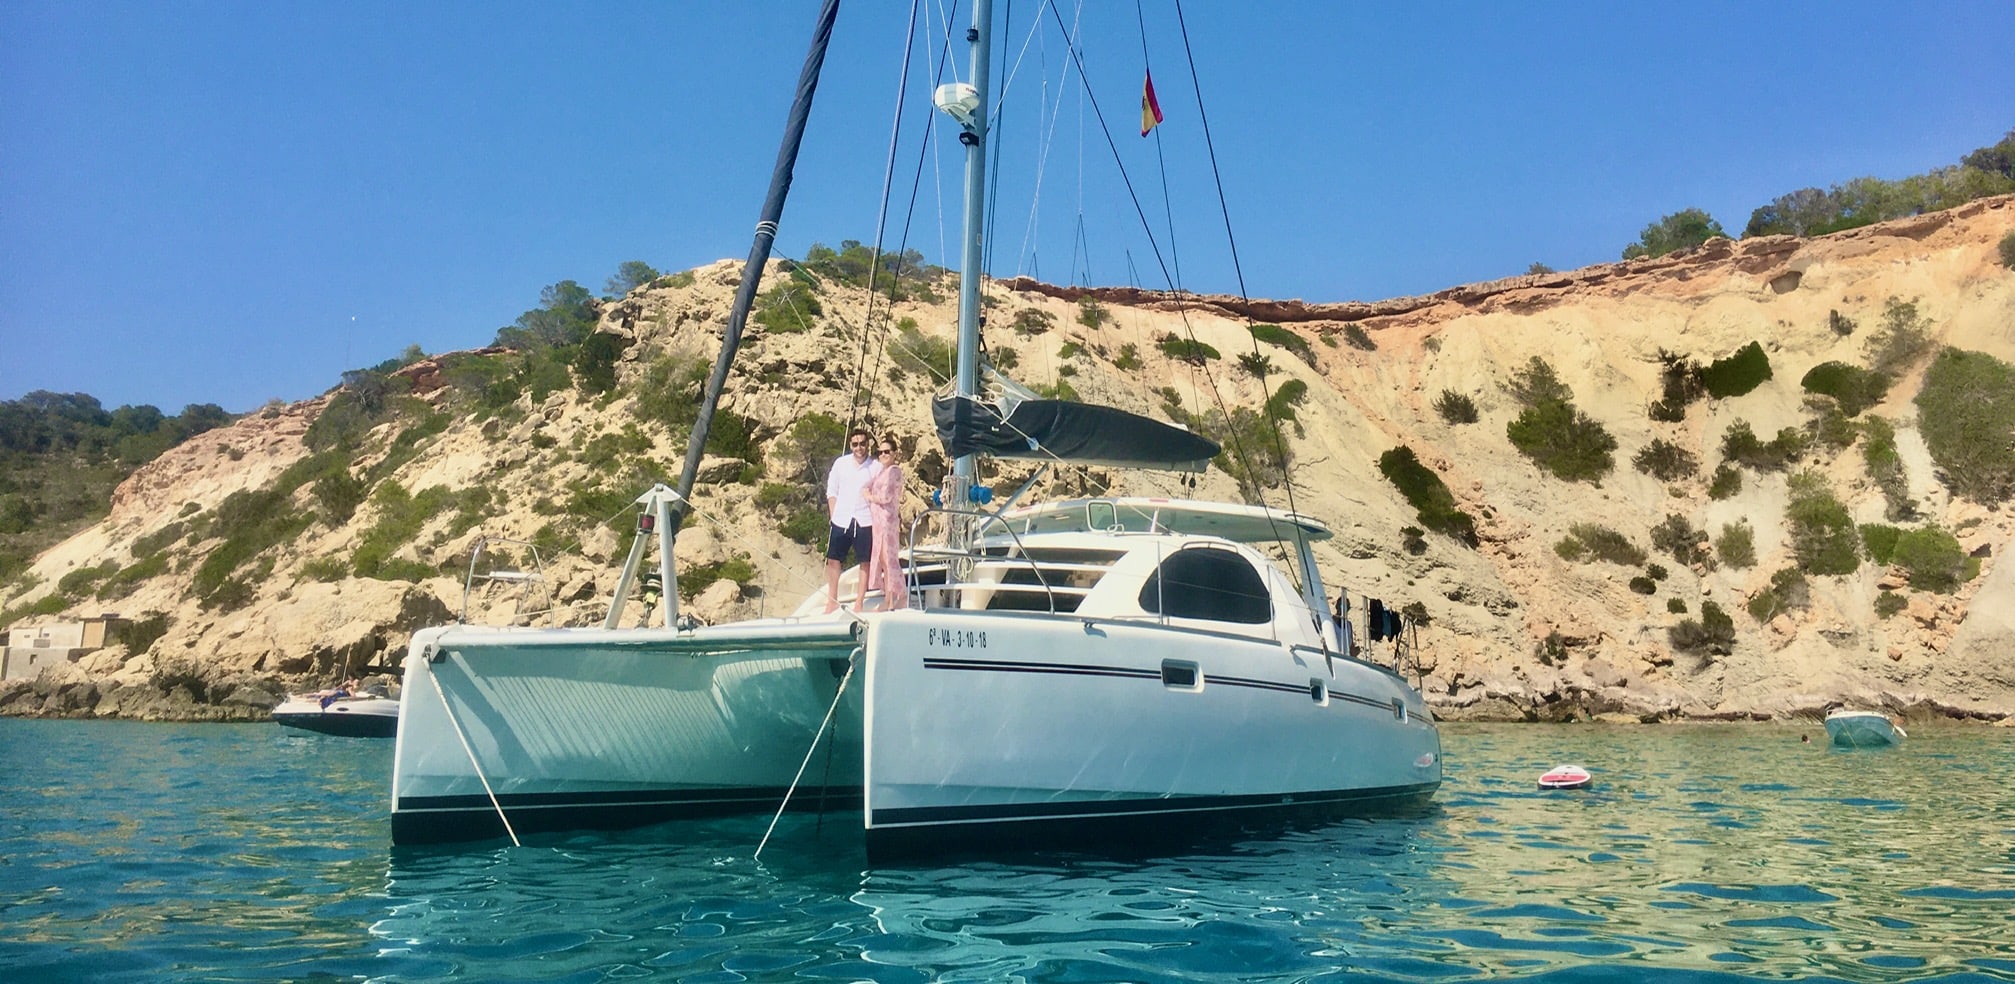 Alquiler de barco en Ibiza - pareja de novios